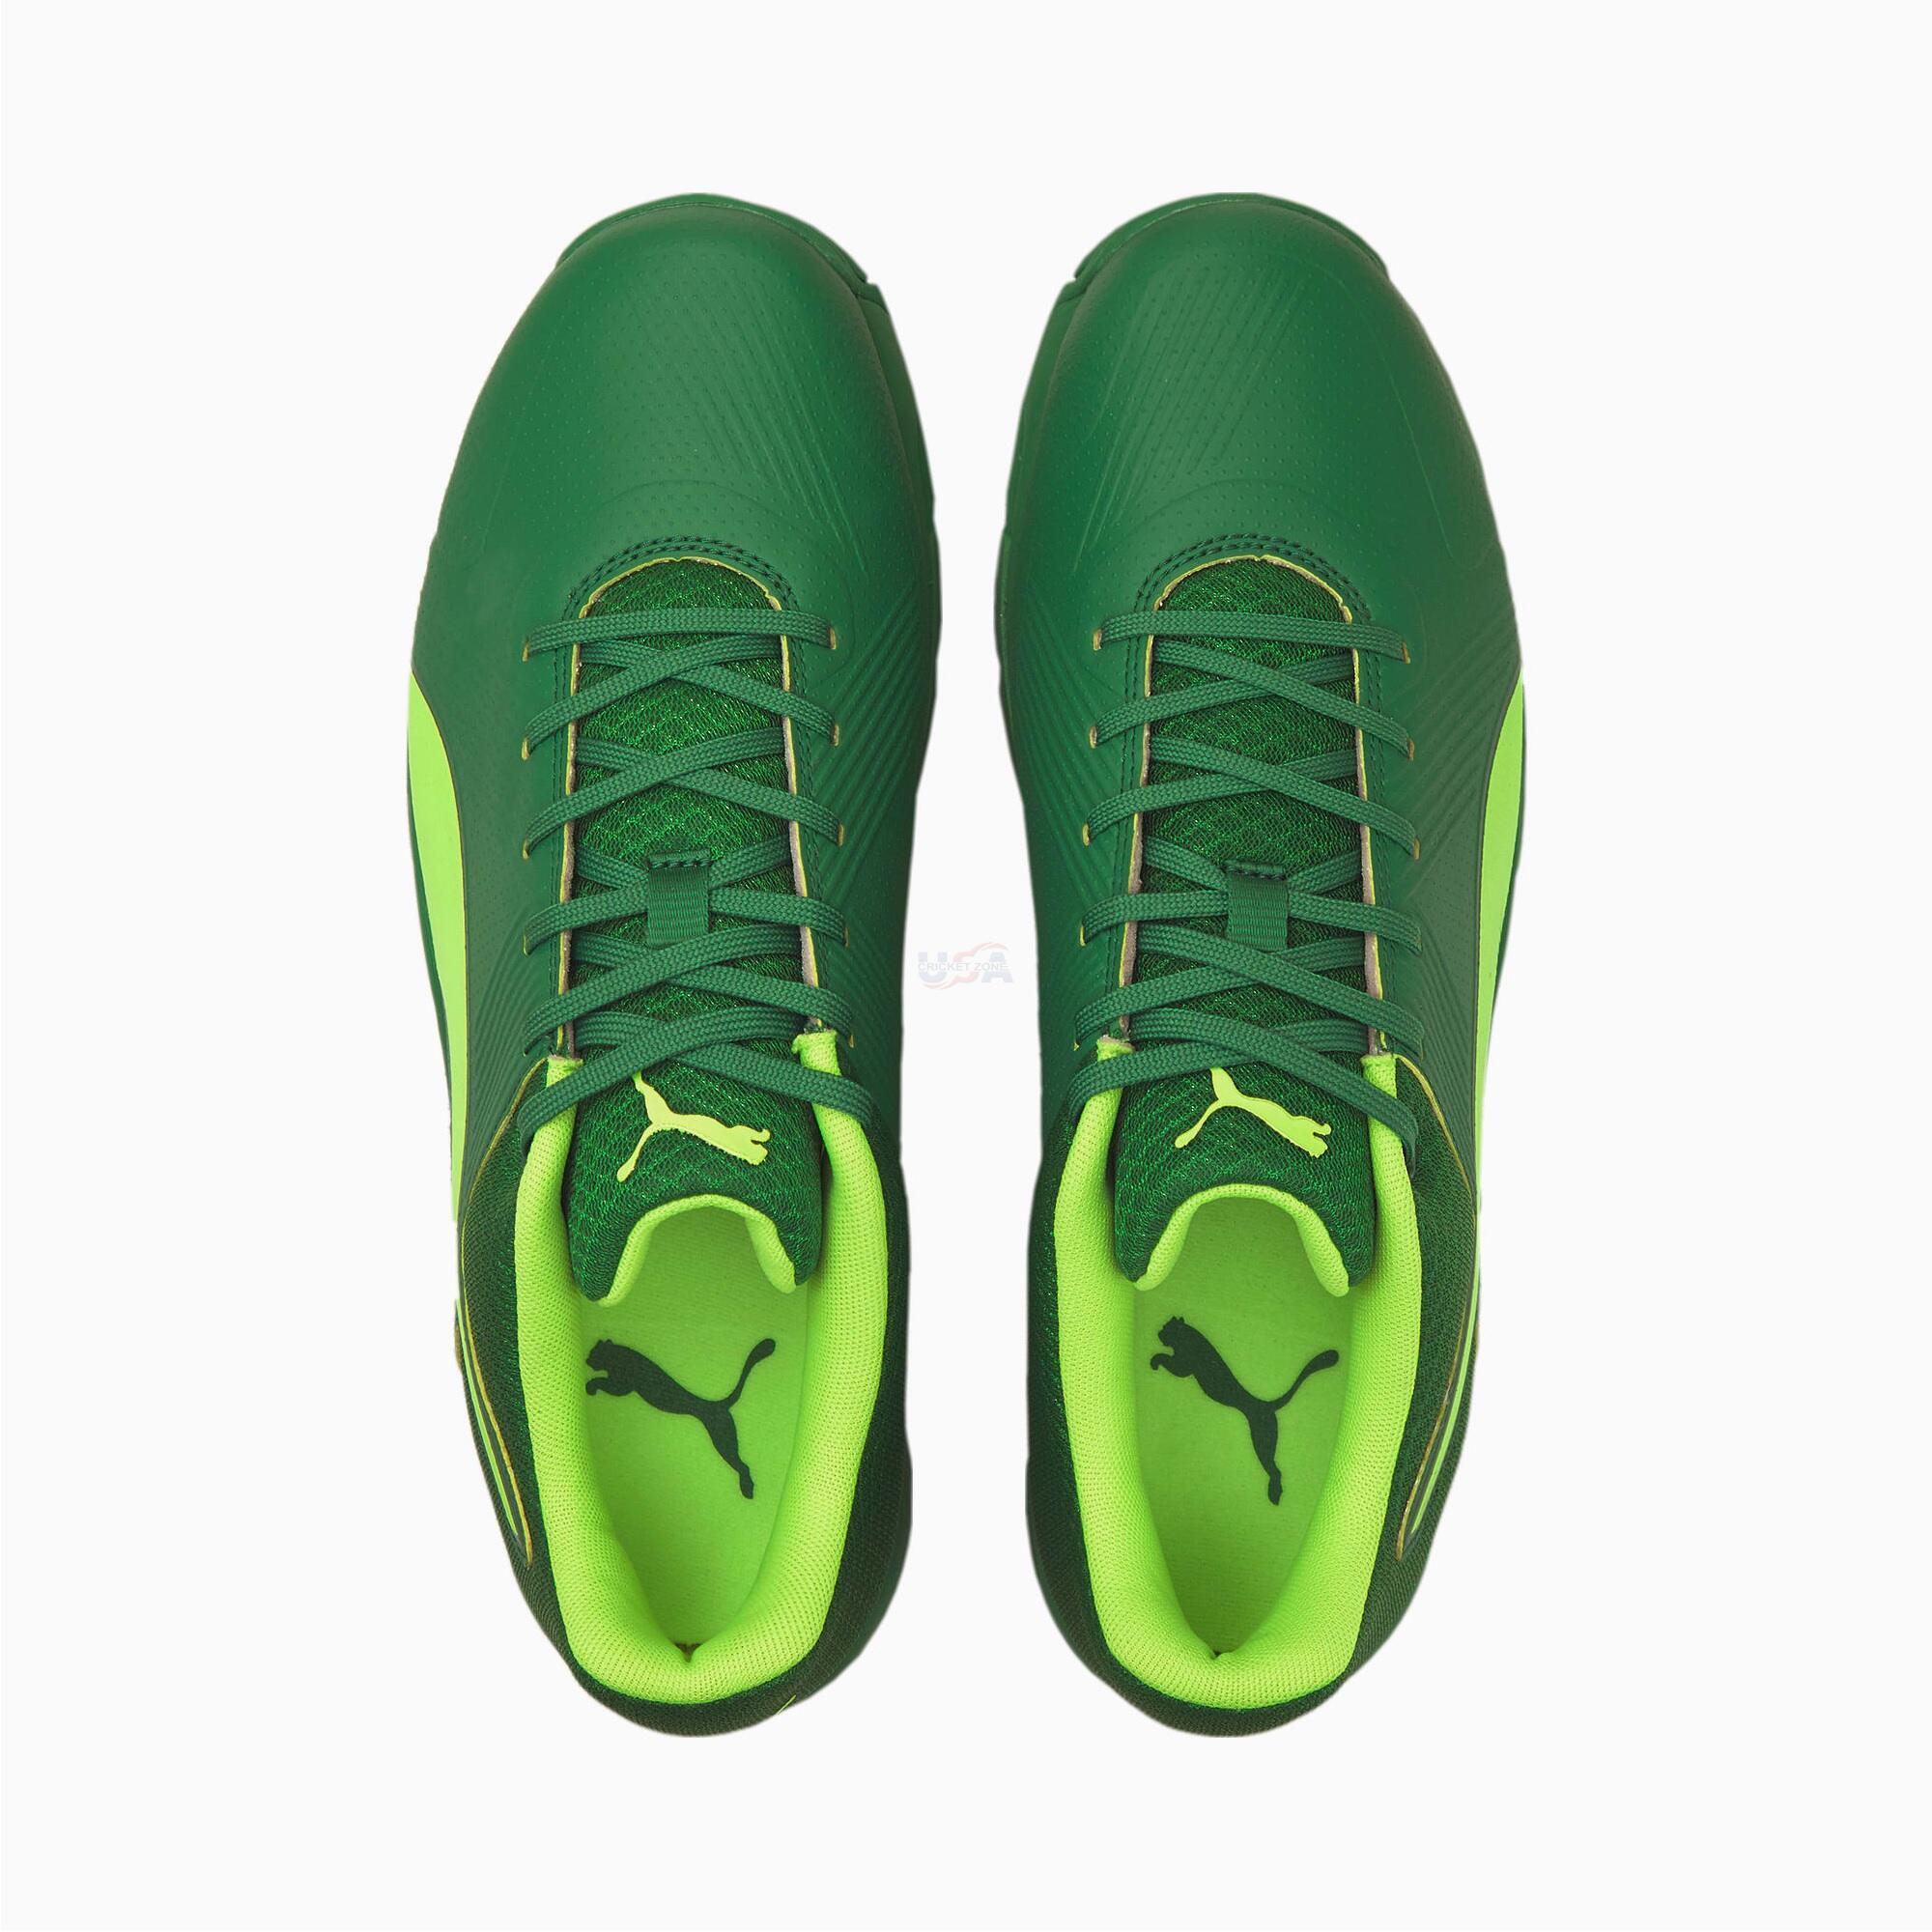 Puma Spike 19.2 Men's Cricket Shoes UK11/US12 / Green